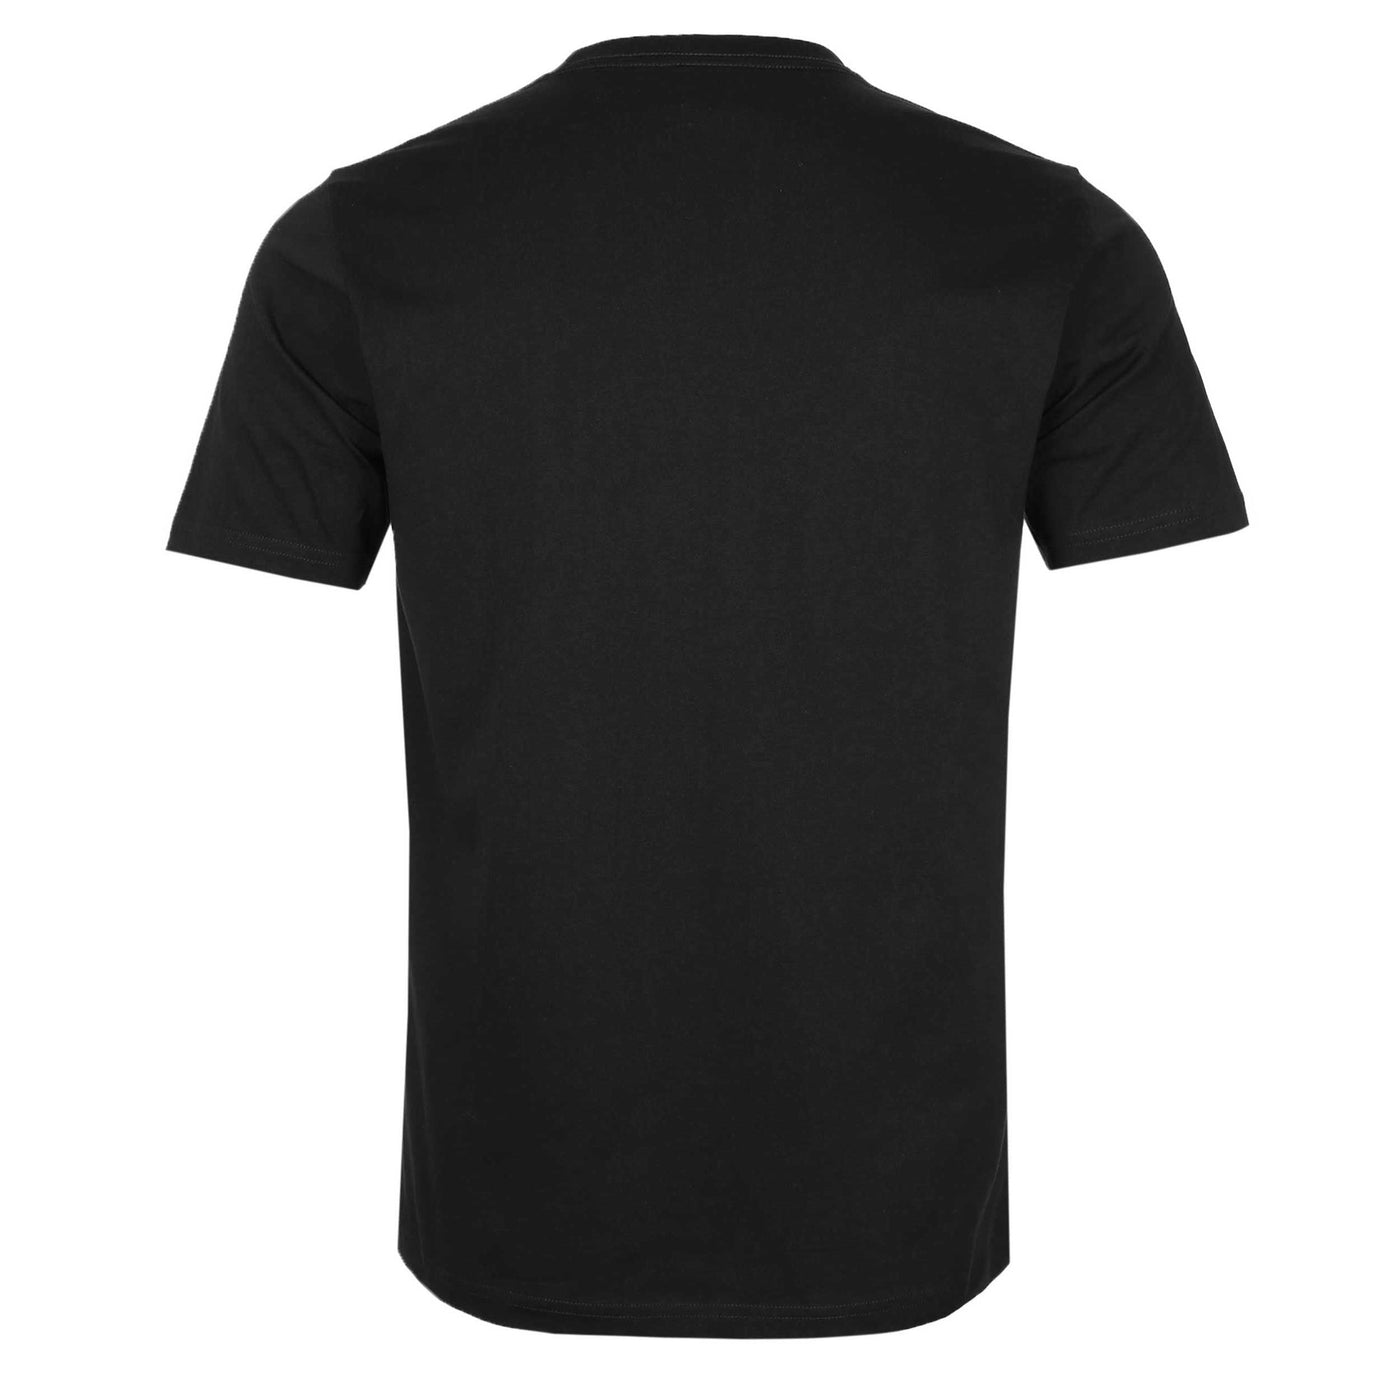 Paul Smith Opposite Faces T Shirt in Black Back